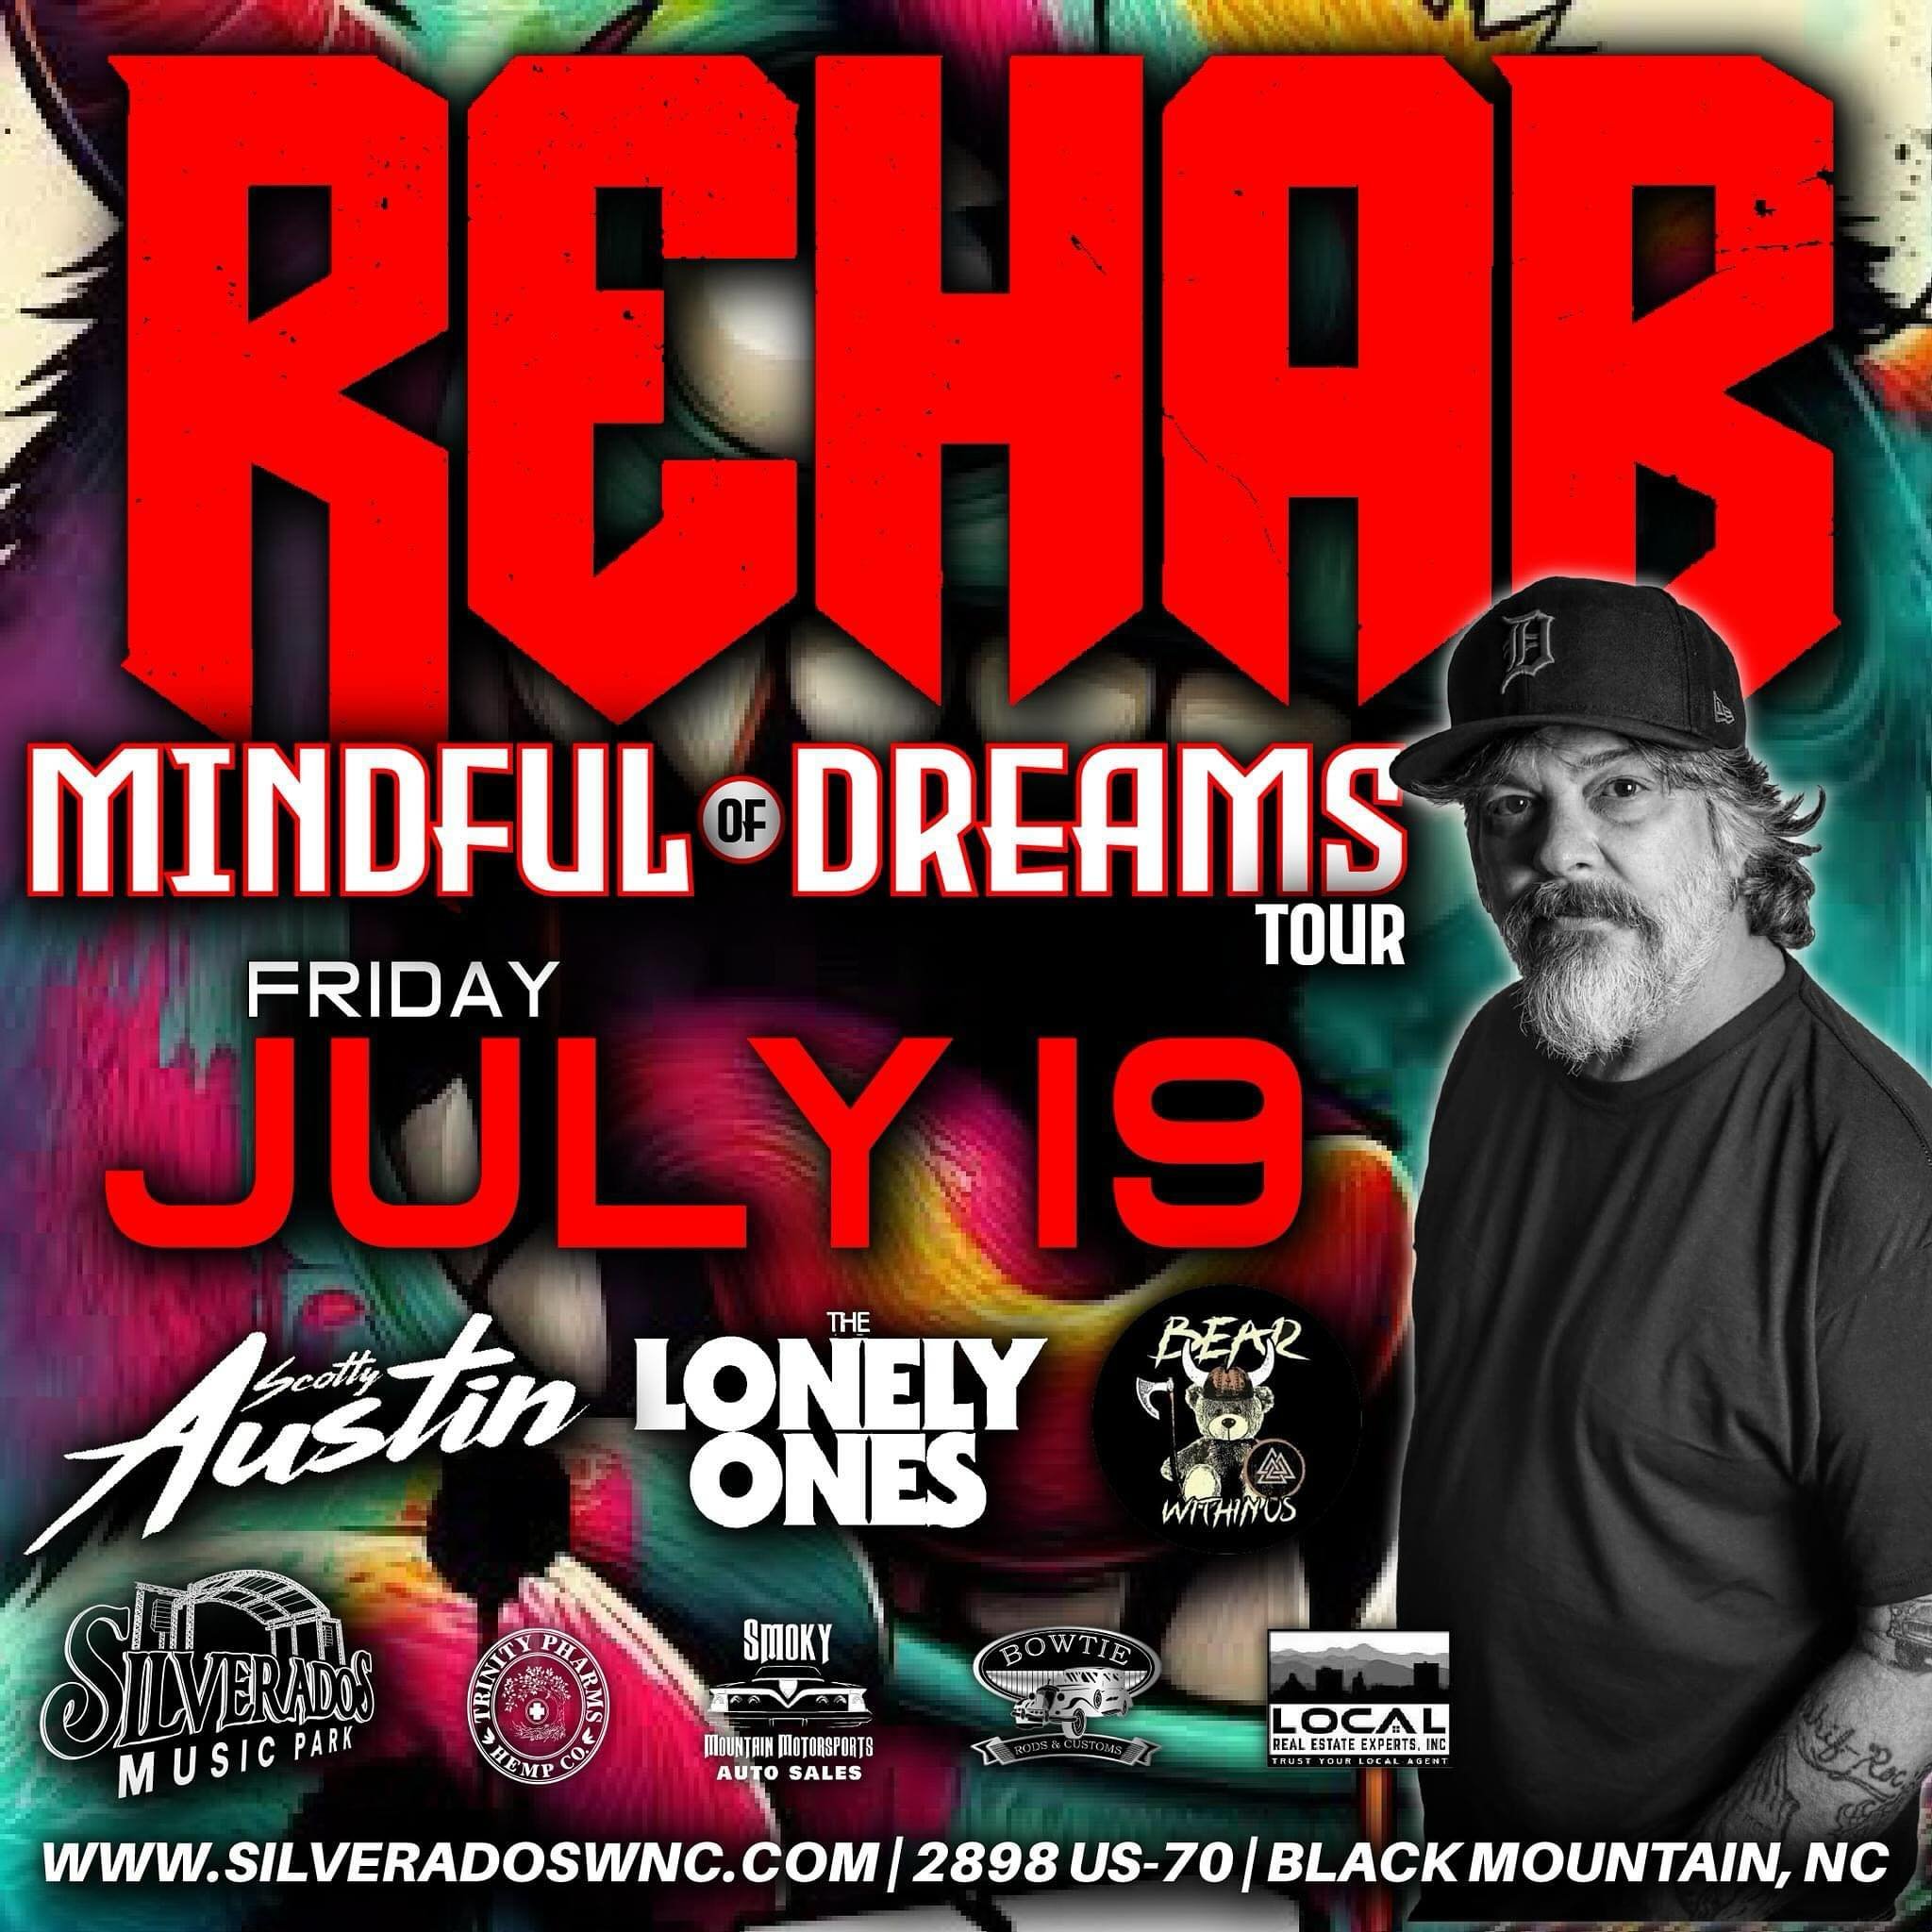 See Rehab LIVE Friday July 19th at Silverados in Black Mountain, NC! #rehabmusic #wearerehab #ontour #blackmountainnc